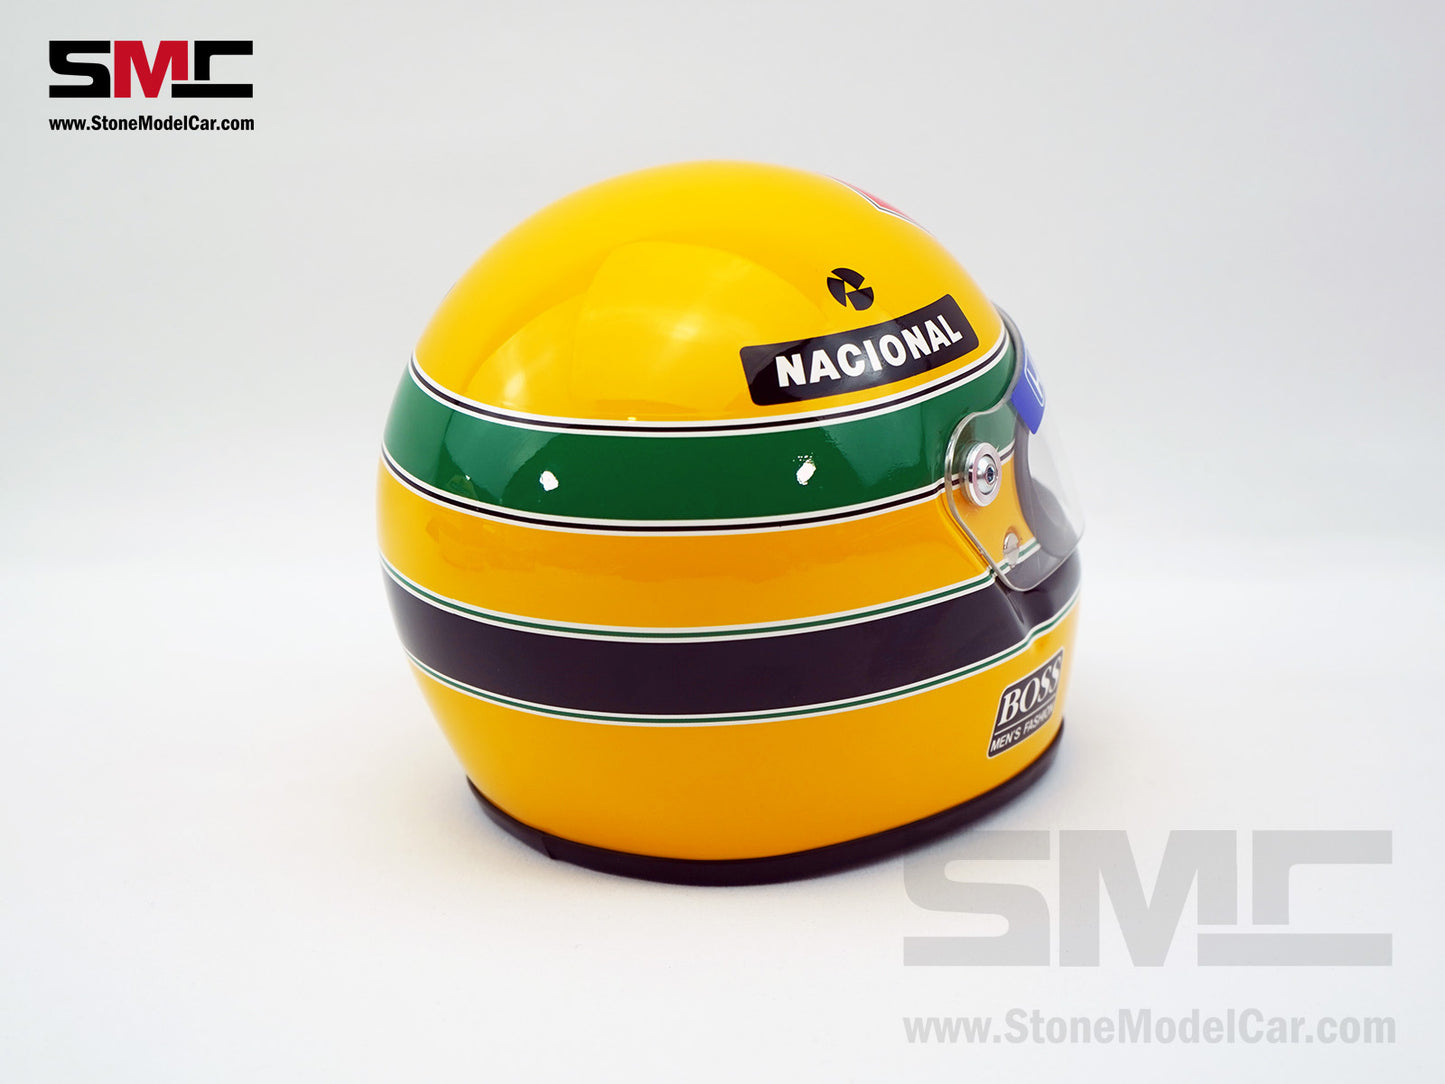 Mclaren MP4/4 #12 Ayrton Senna 1988 F1 World Champion 1:2 Miniature Helmet with Decal